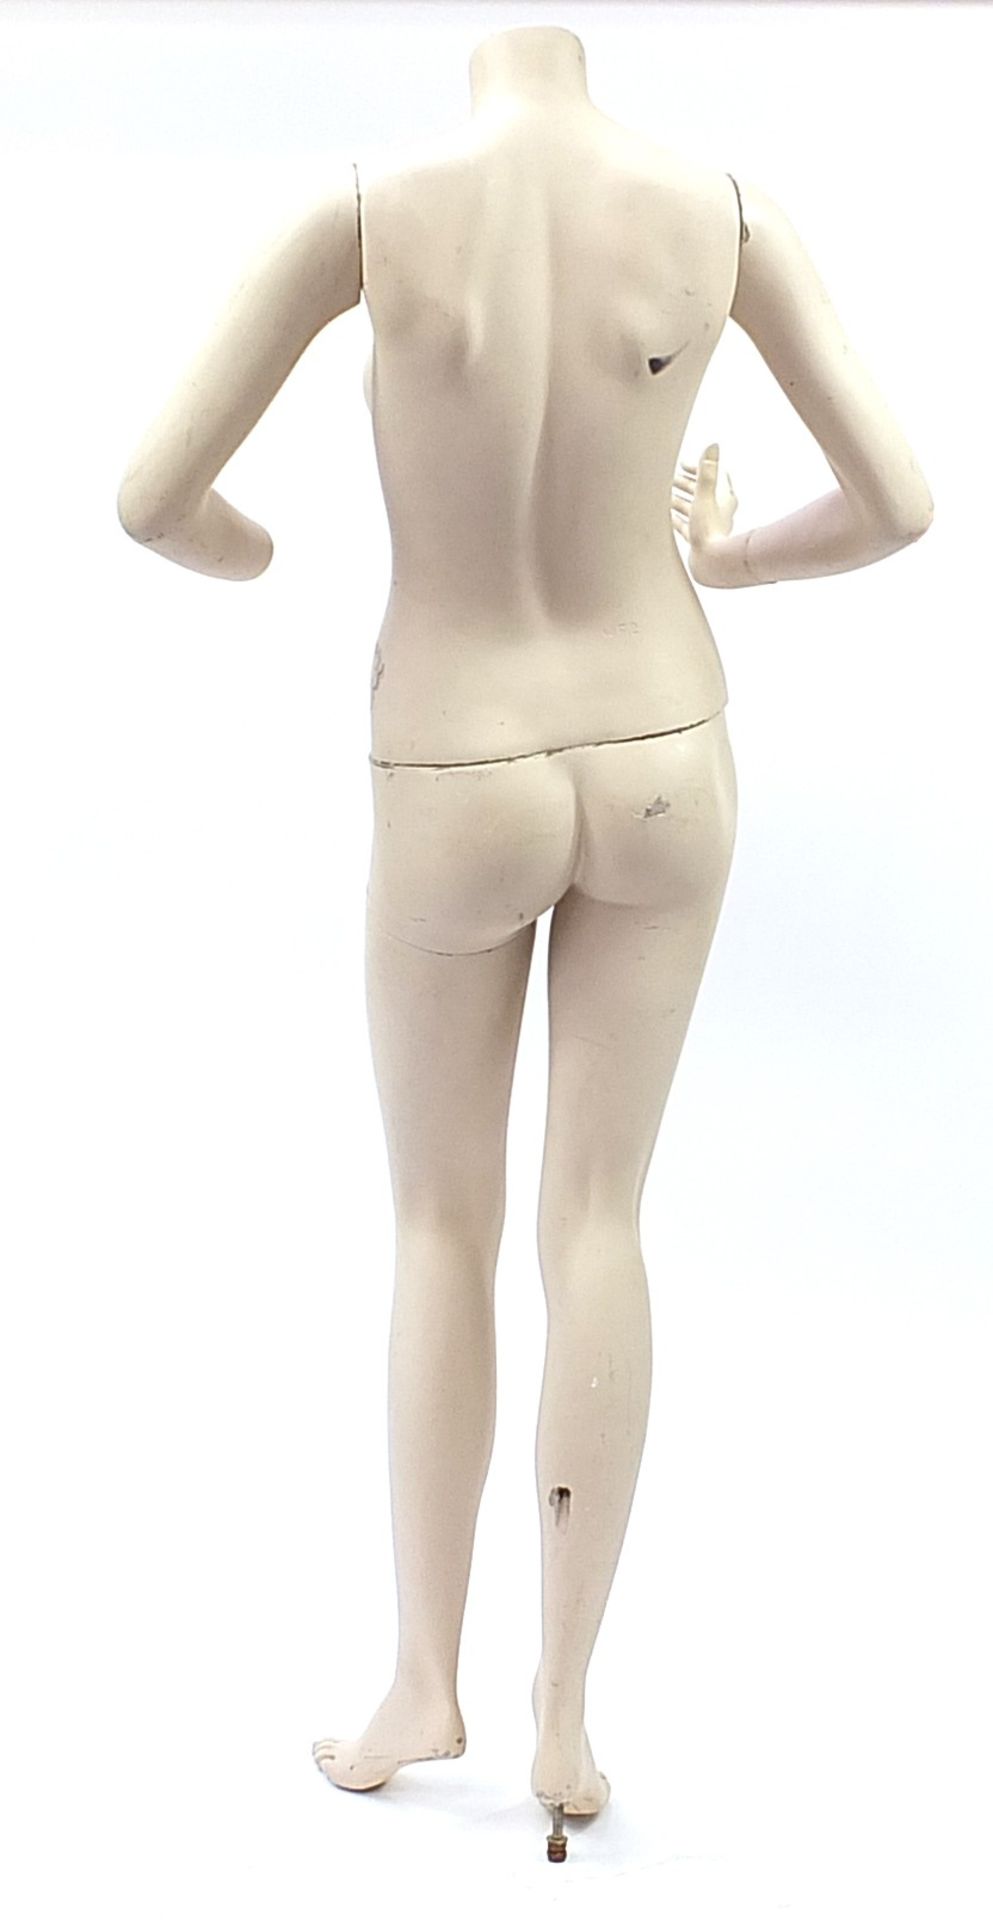 Life size shop display female mannequin, 155cm high - Bild 2 aus 3